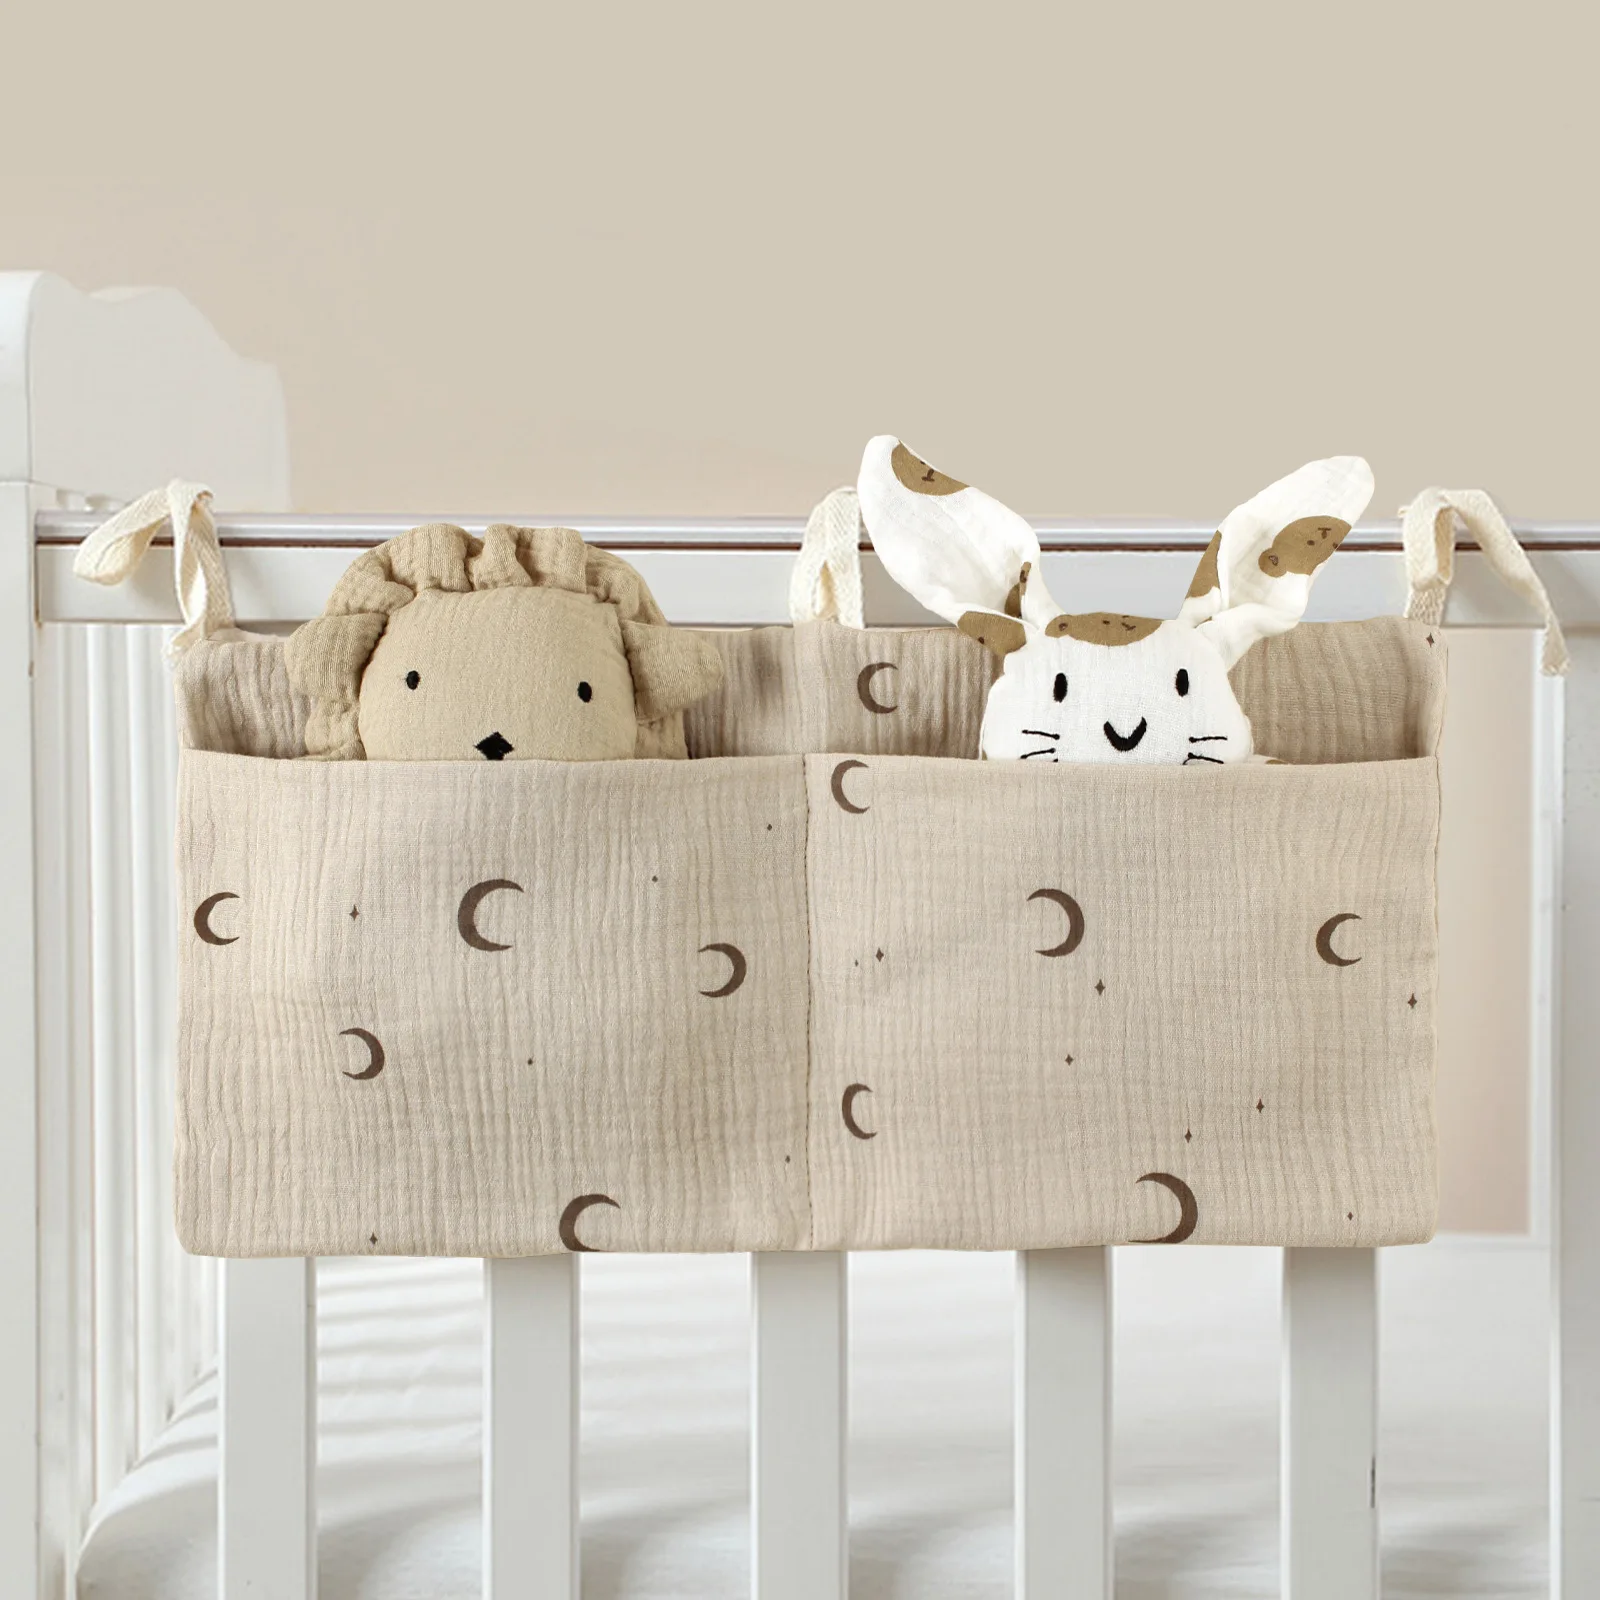 Nest Baby bedside bed hanging storage bag pocket diaper caddy cotton muslin baby nursery crib organizer